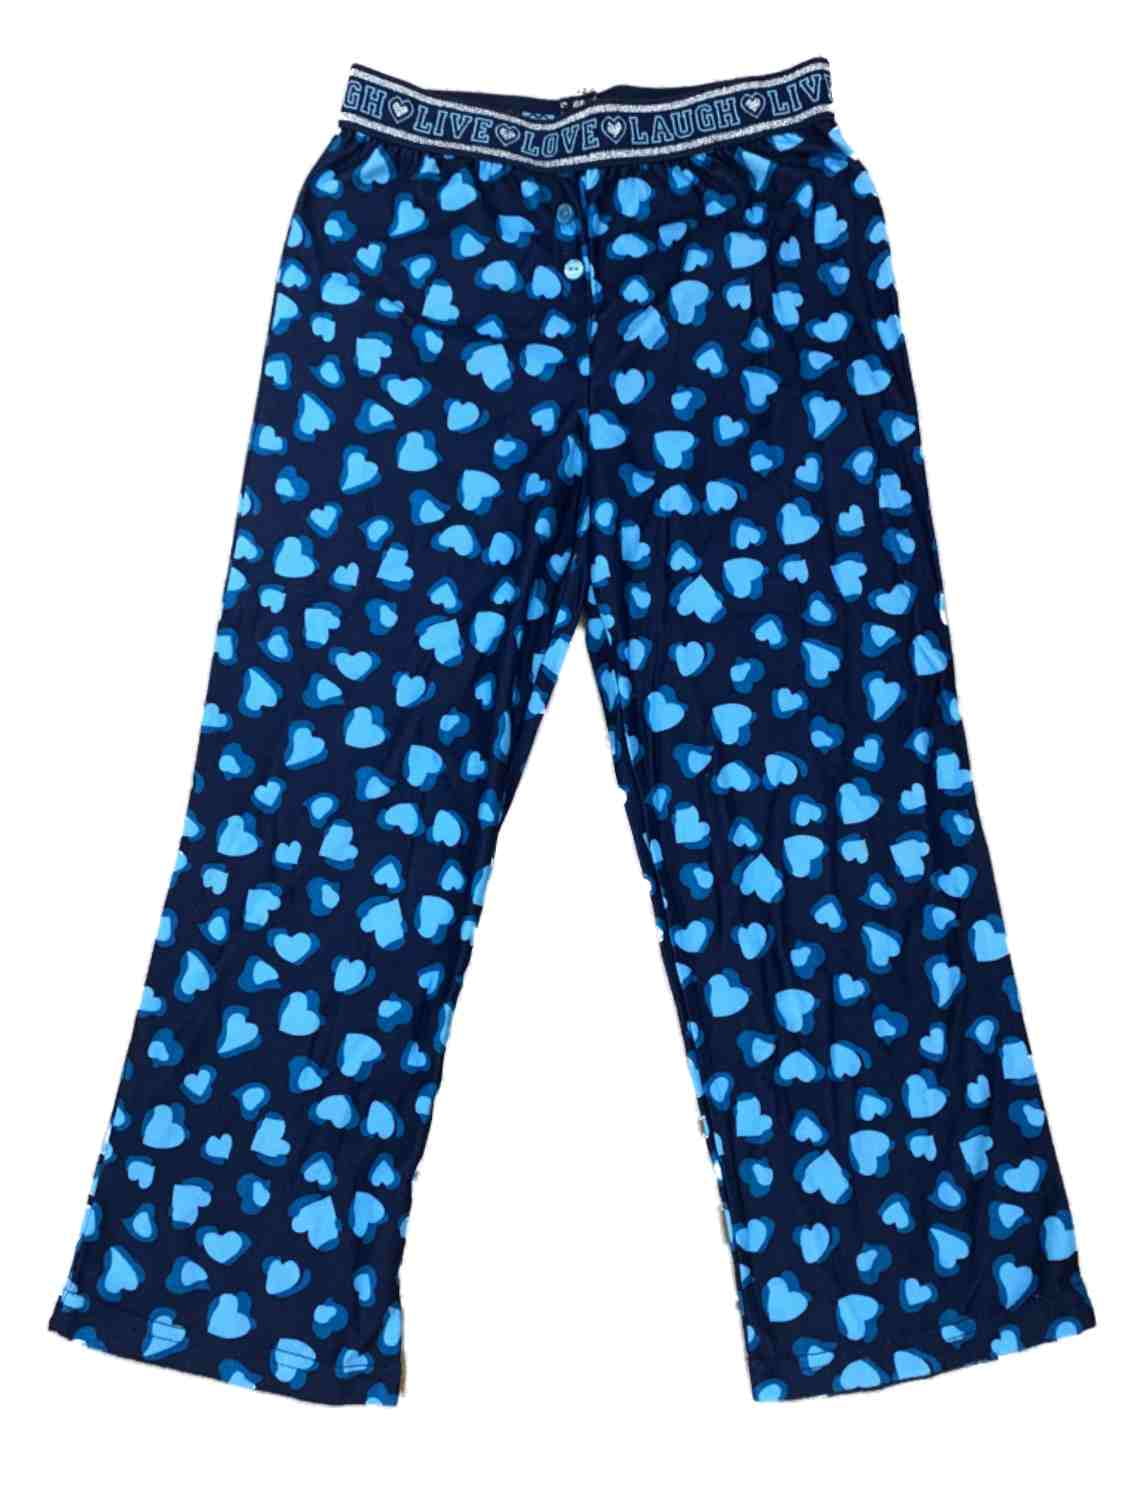 Girls Pink & Blue Soccer Ball & Hearts Soft Sleep Pants Pajama Bottom XS